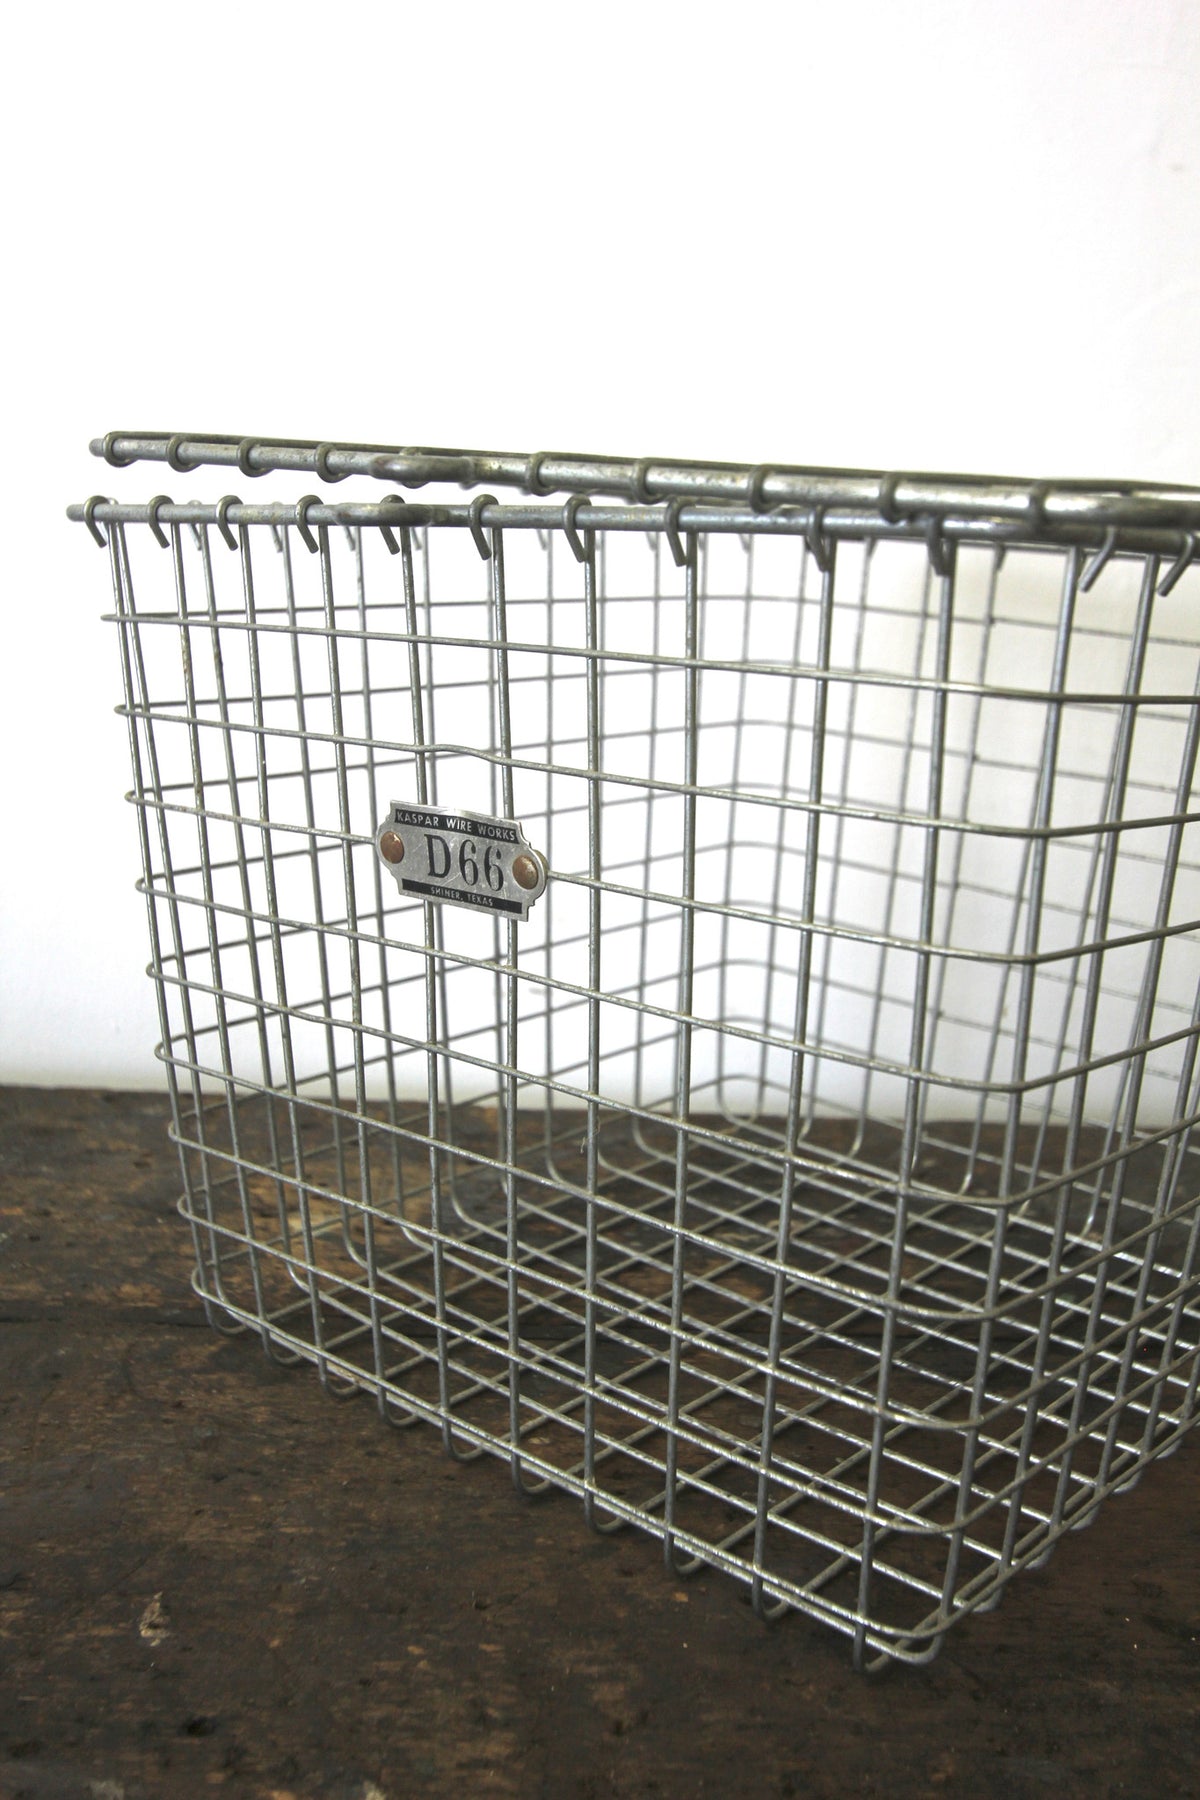 Wire Locker Basket